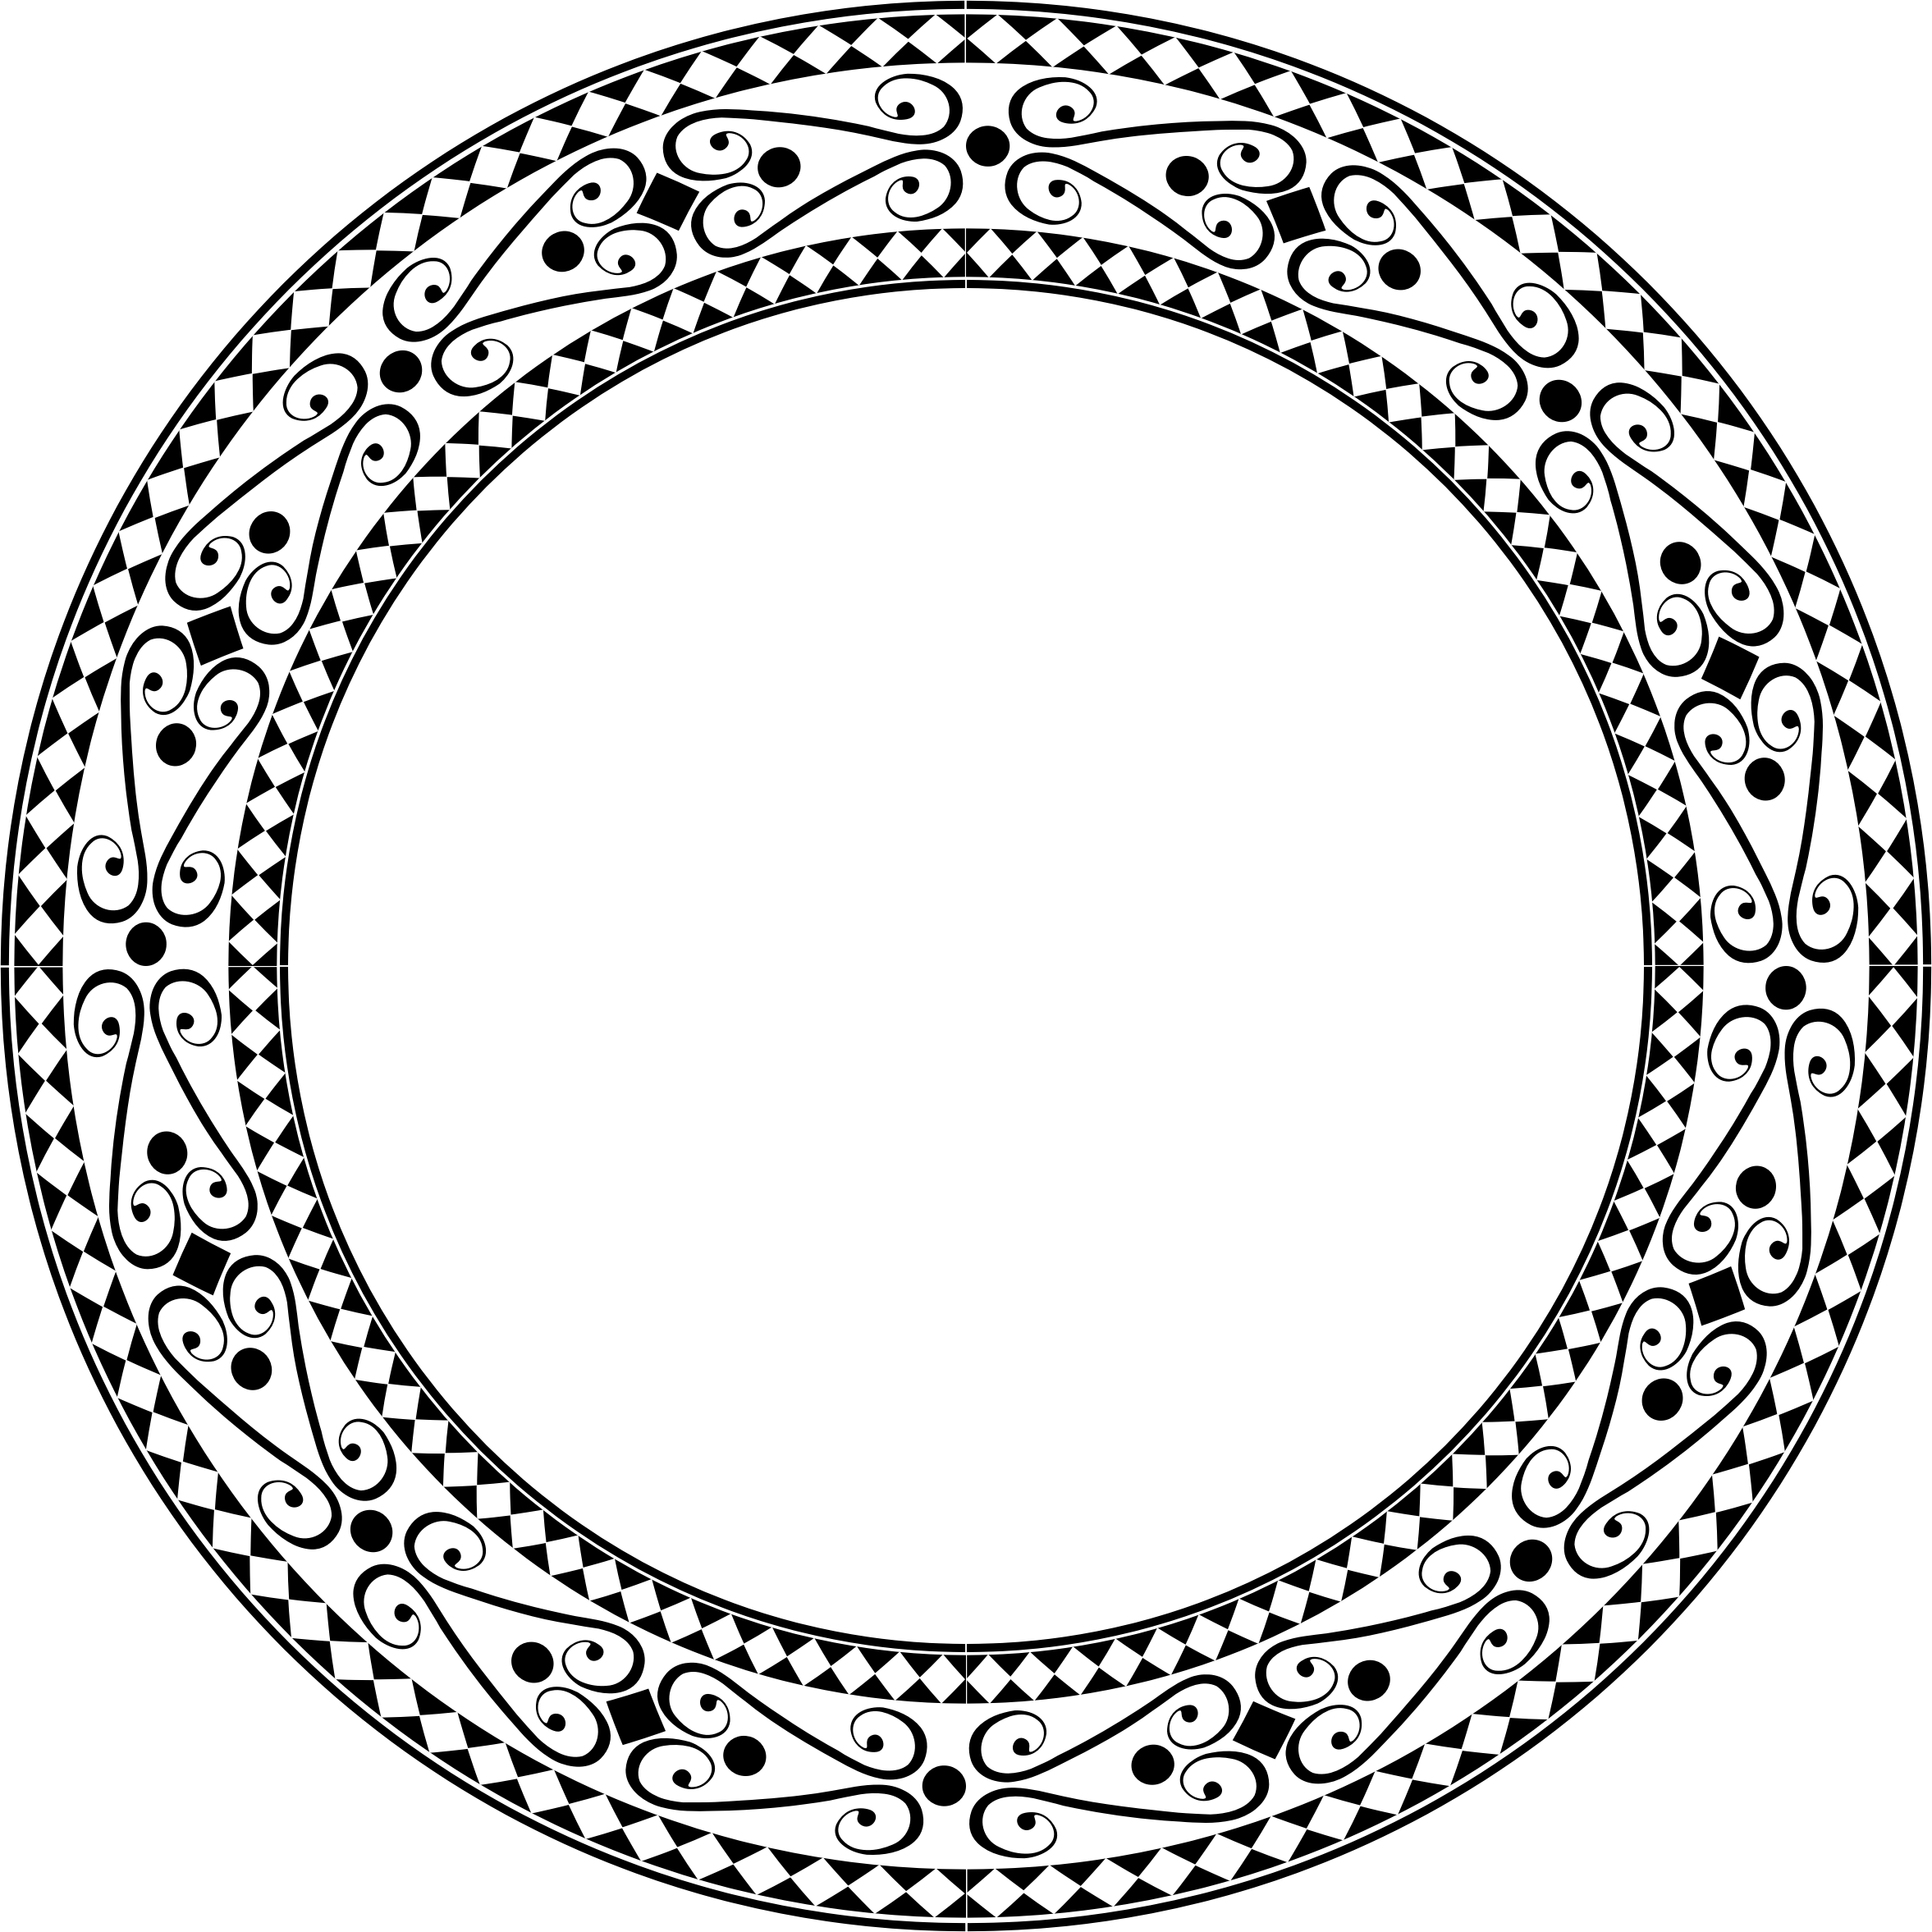 Download Vector Circle Frame PNG Image BackgroundChakra | PNG Arts